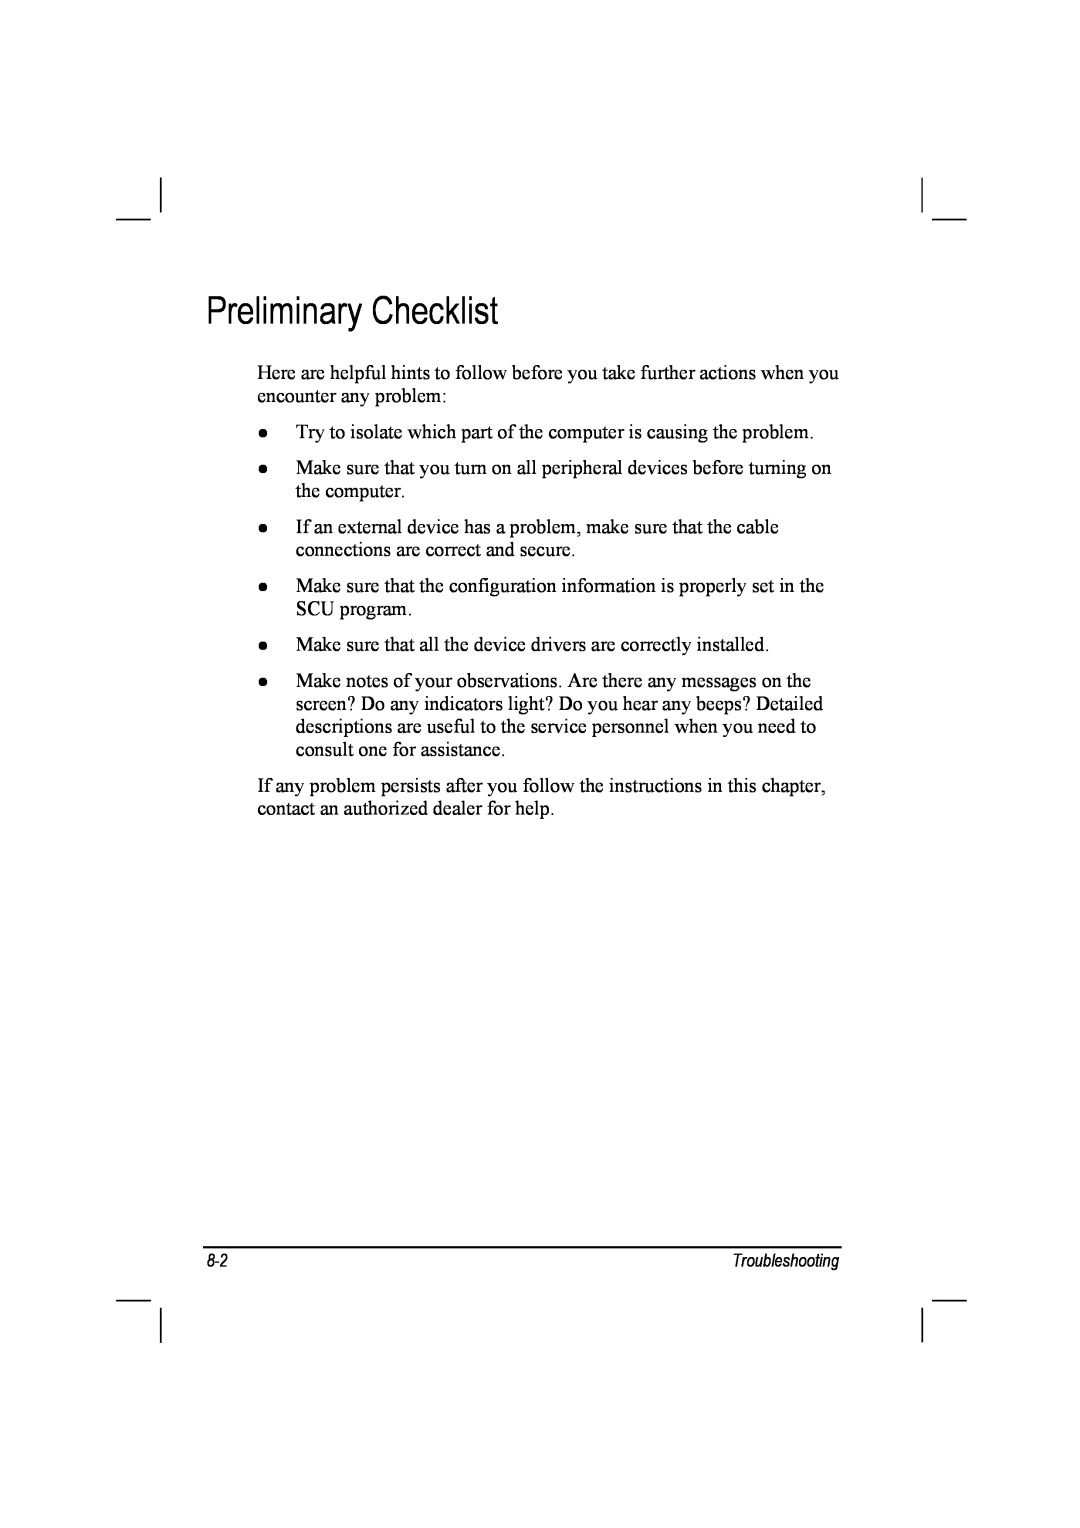 TAG 10 manual Preliminary Checklist 